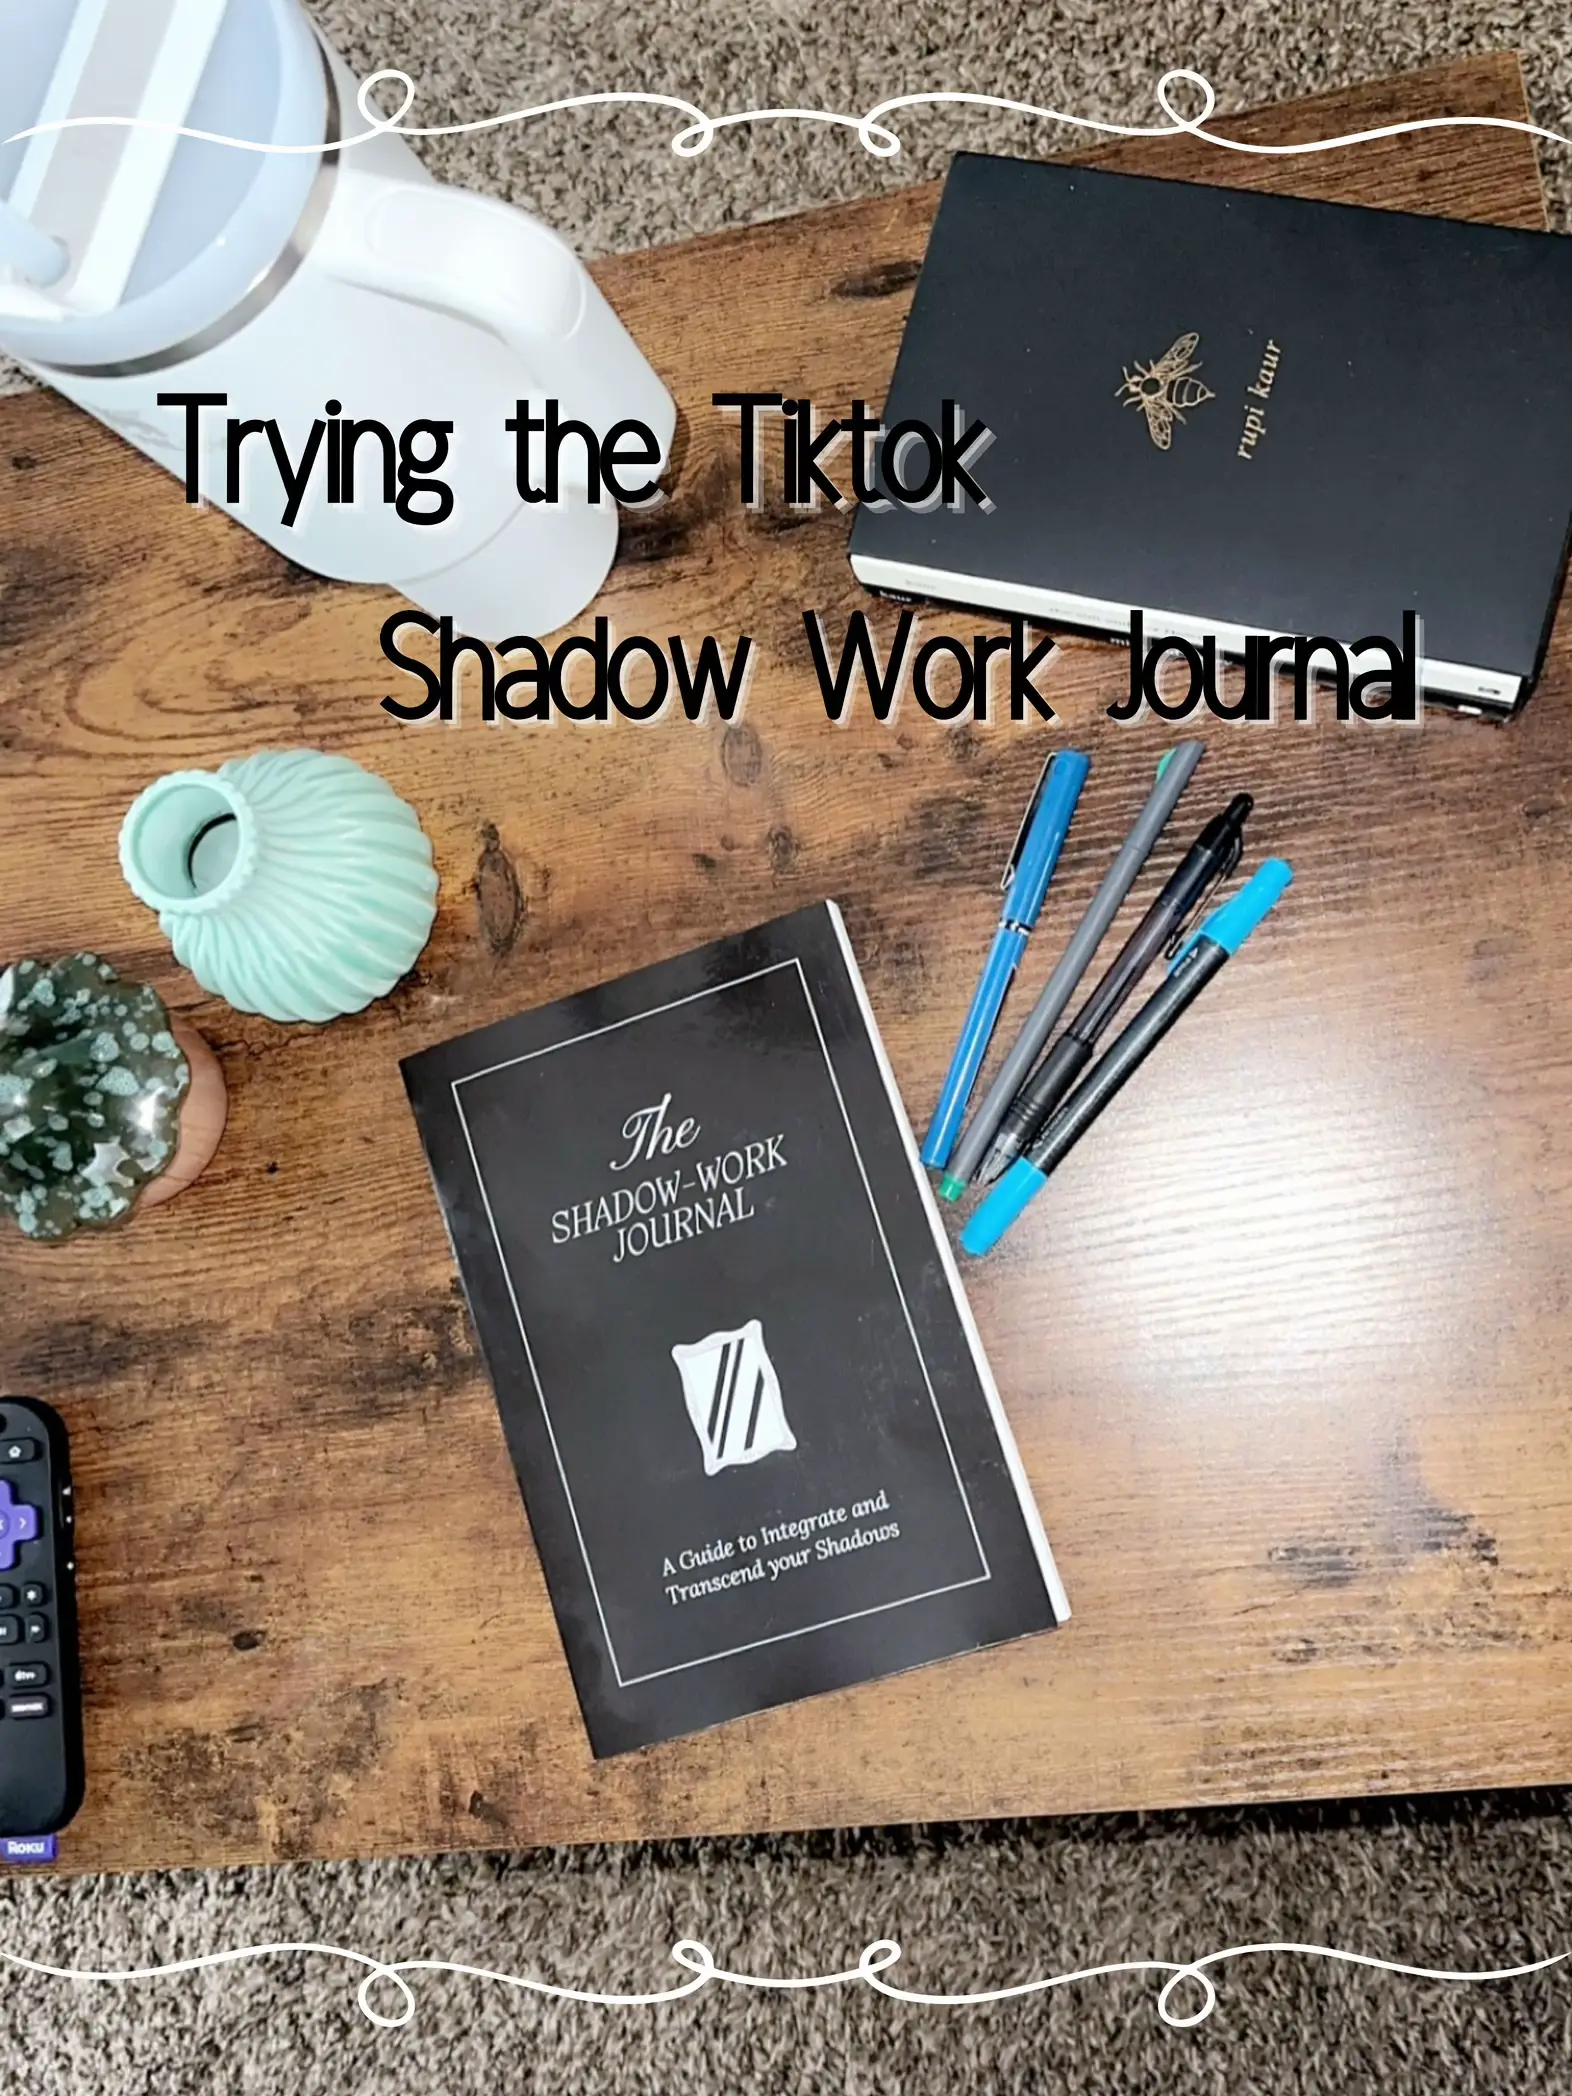 the shadow work journal - Lemon8 Search